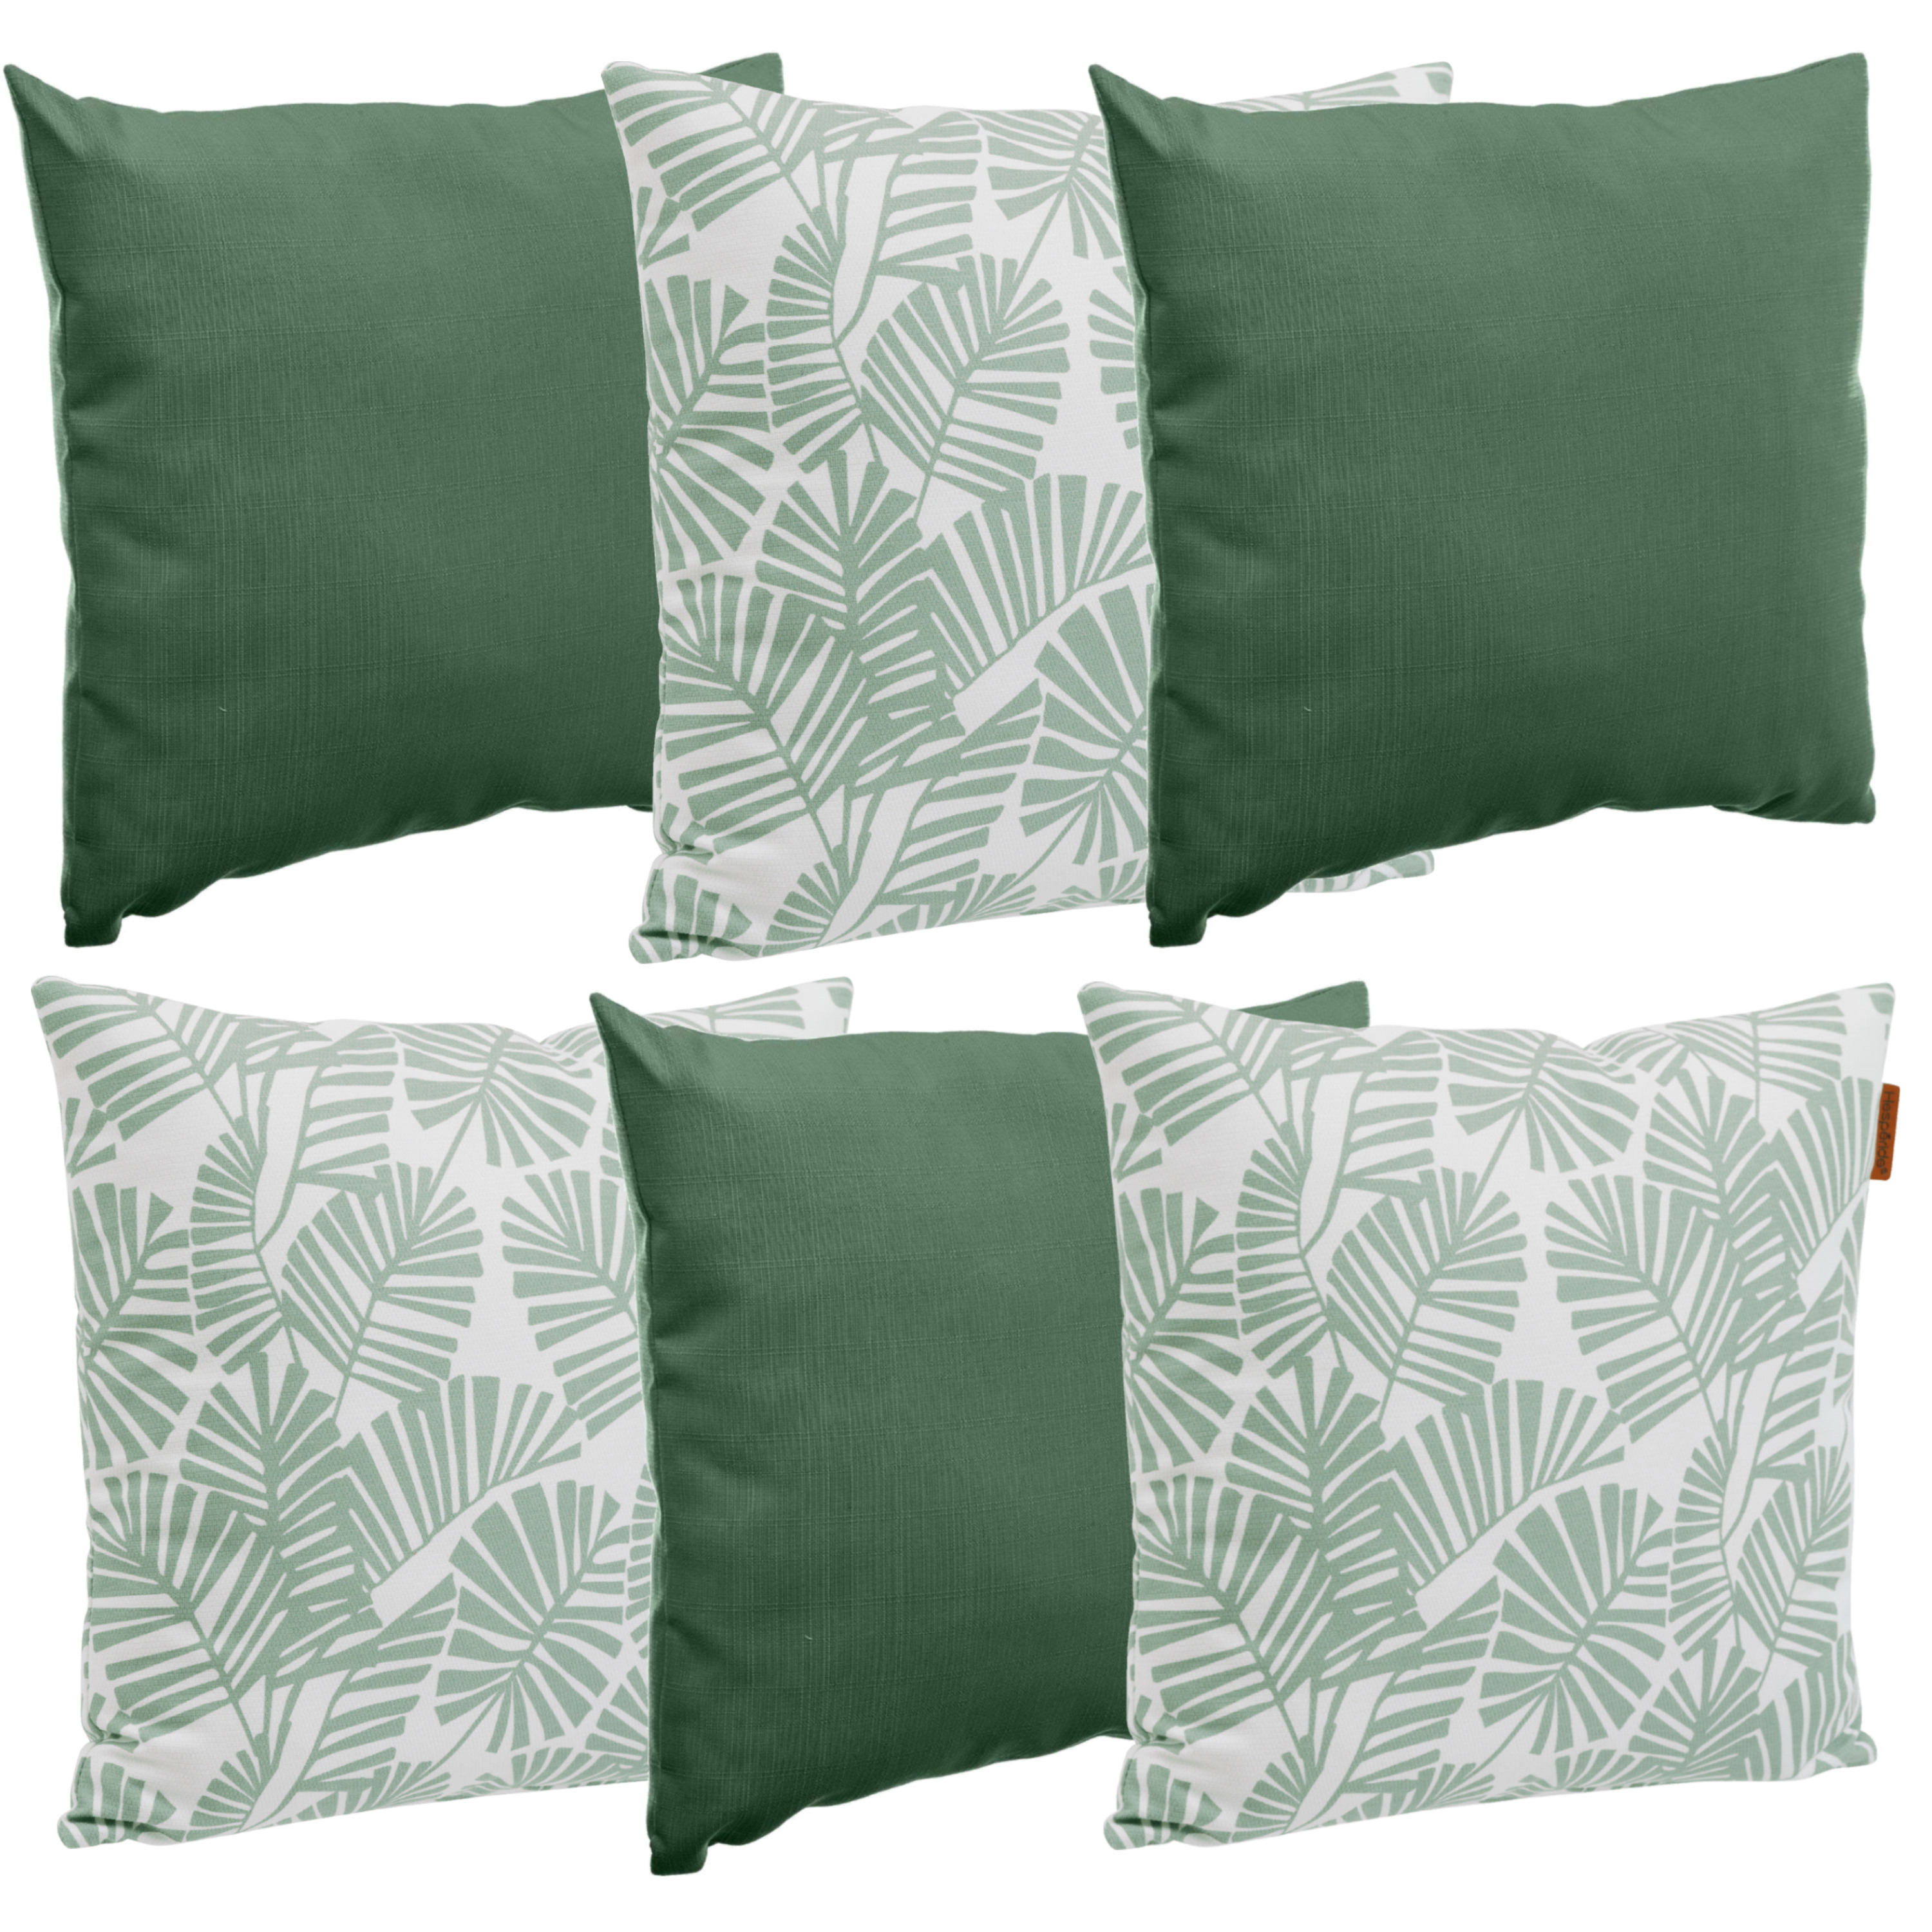 Hesperide Bank-sier-tuin kussens binnen-buiten set 6x stuks palm print-groen 40x40 cm